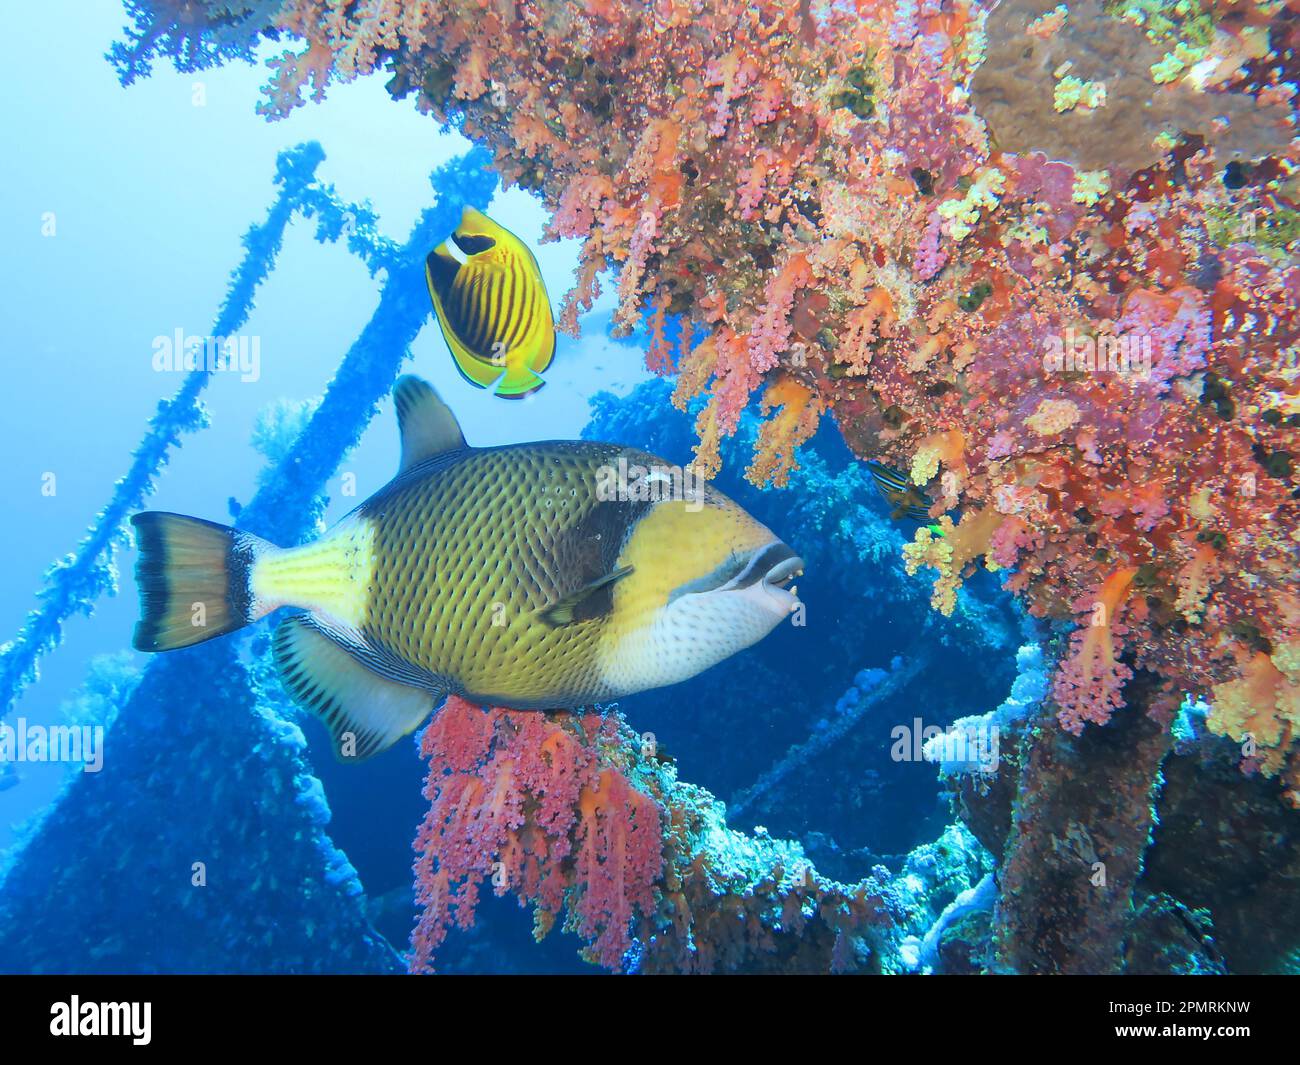 Green titan triggerfish (Balistoides viridescens) Numidia Wreck, Coral, Brother Islands, Red Sea, Egypt Stock Photo